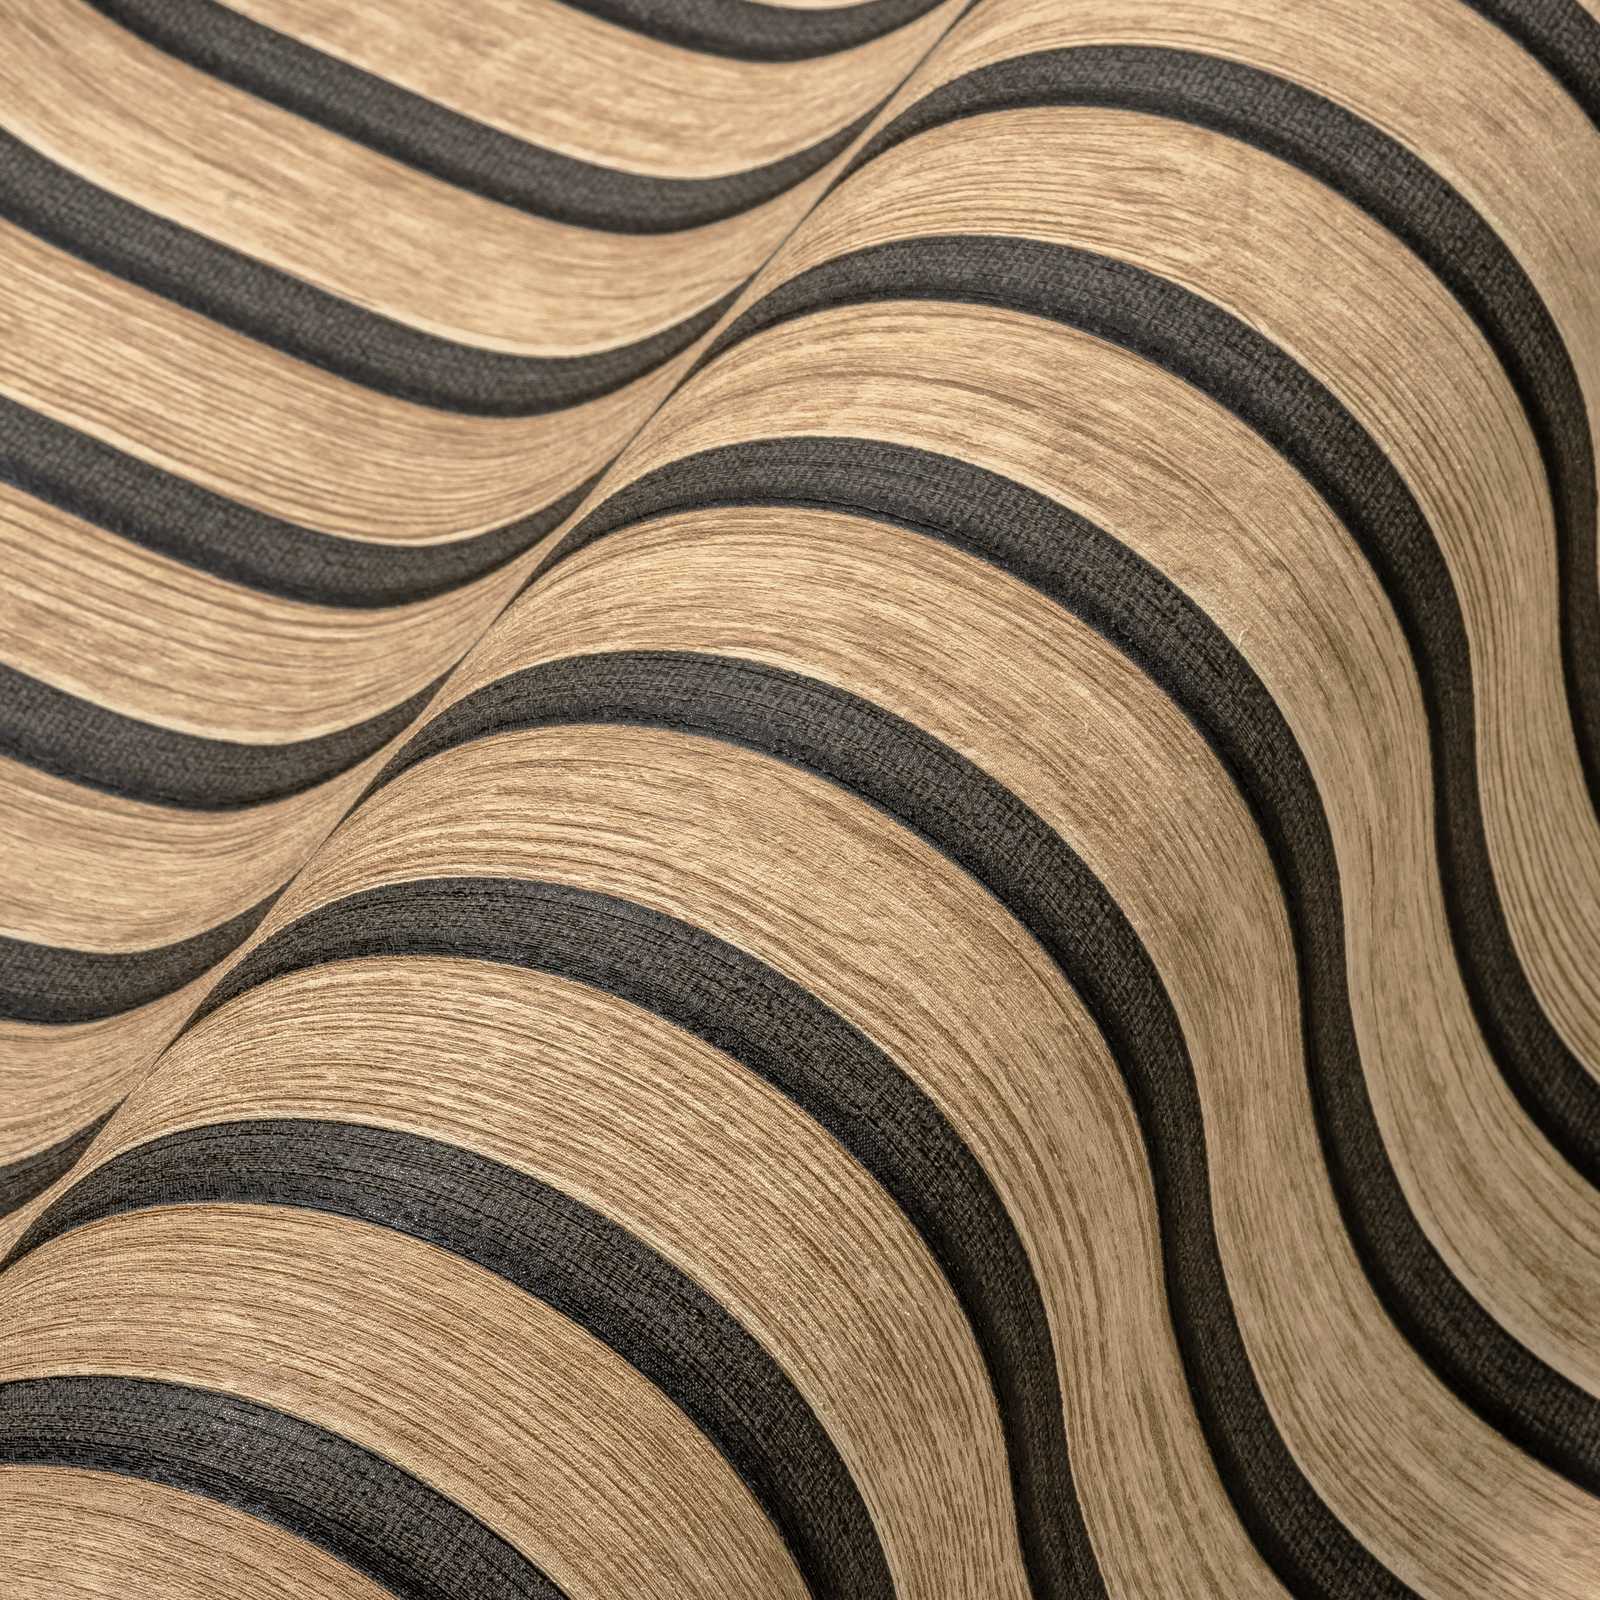             papel pintado con aspecto de madera con patrón de paneles - beige, marrón
        